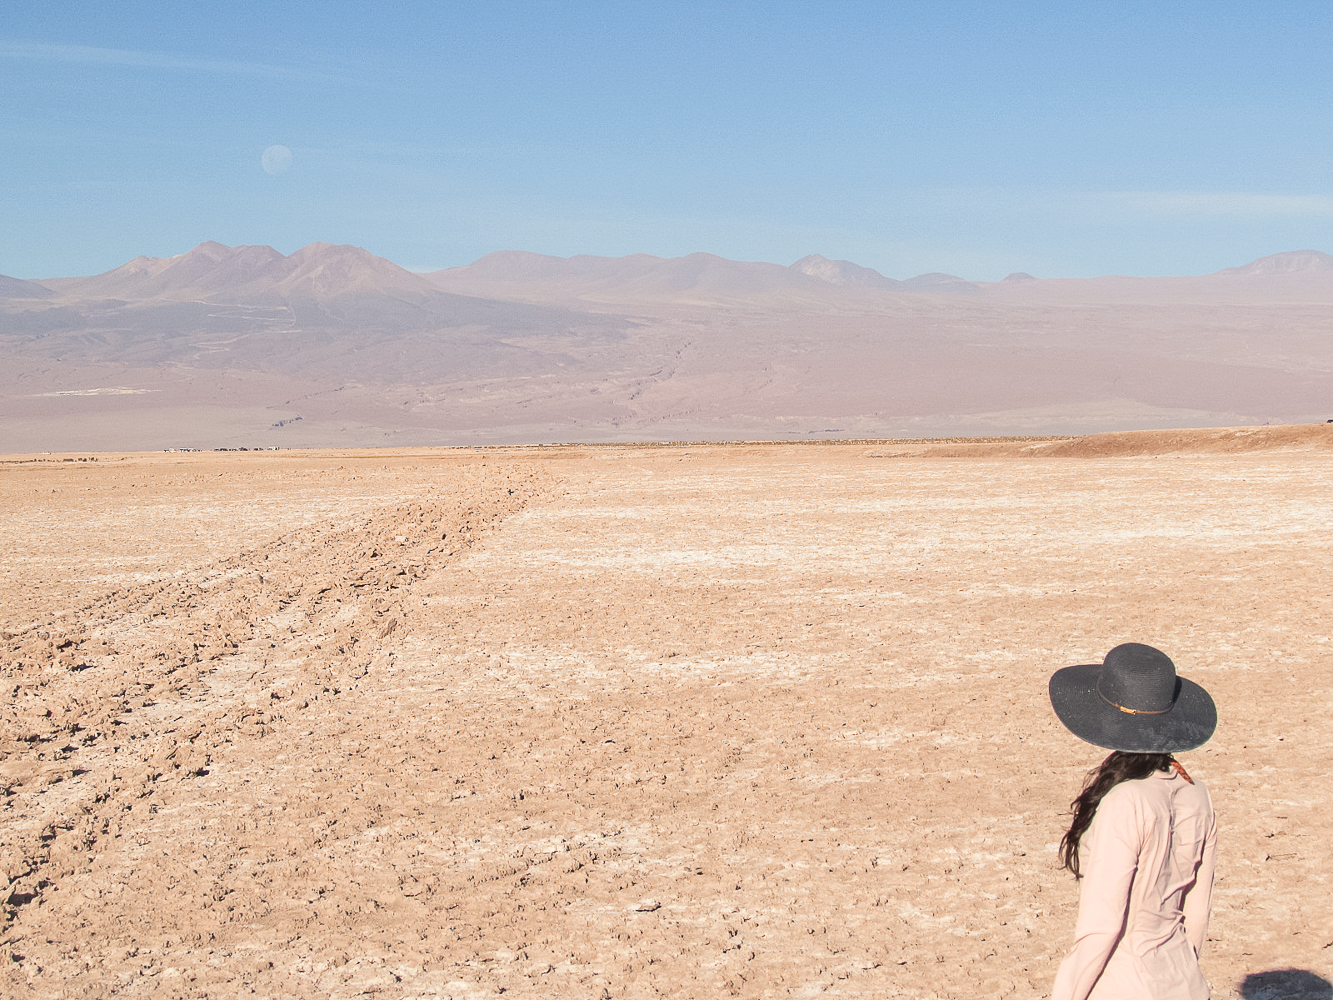 Laguna Tebenquiche no Deserto do Atacama